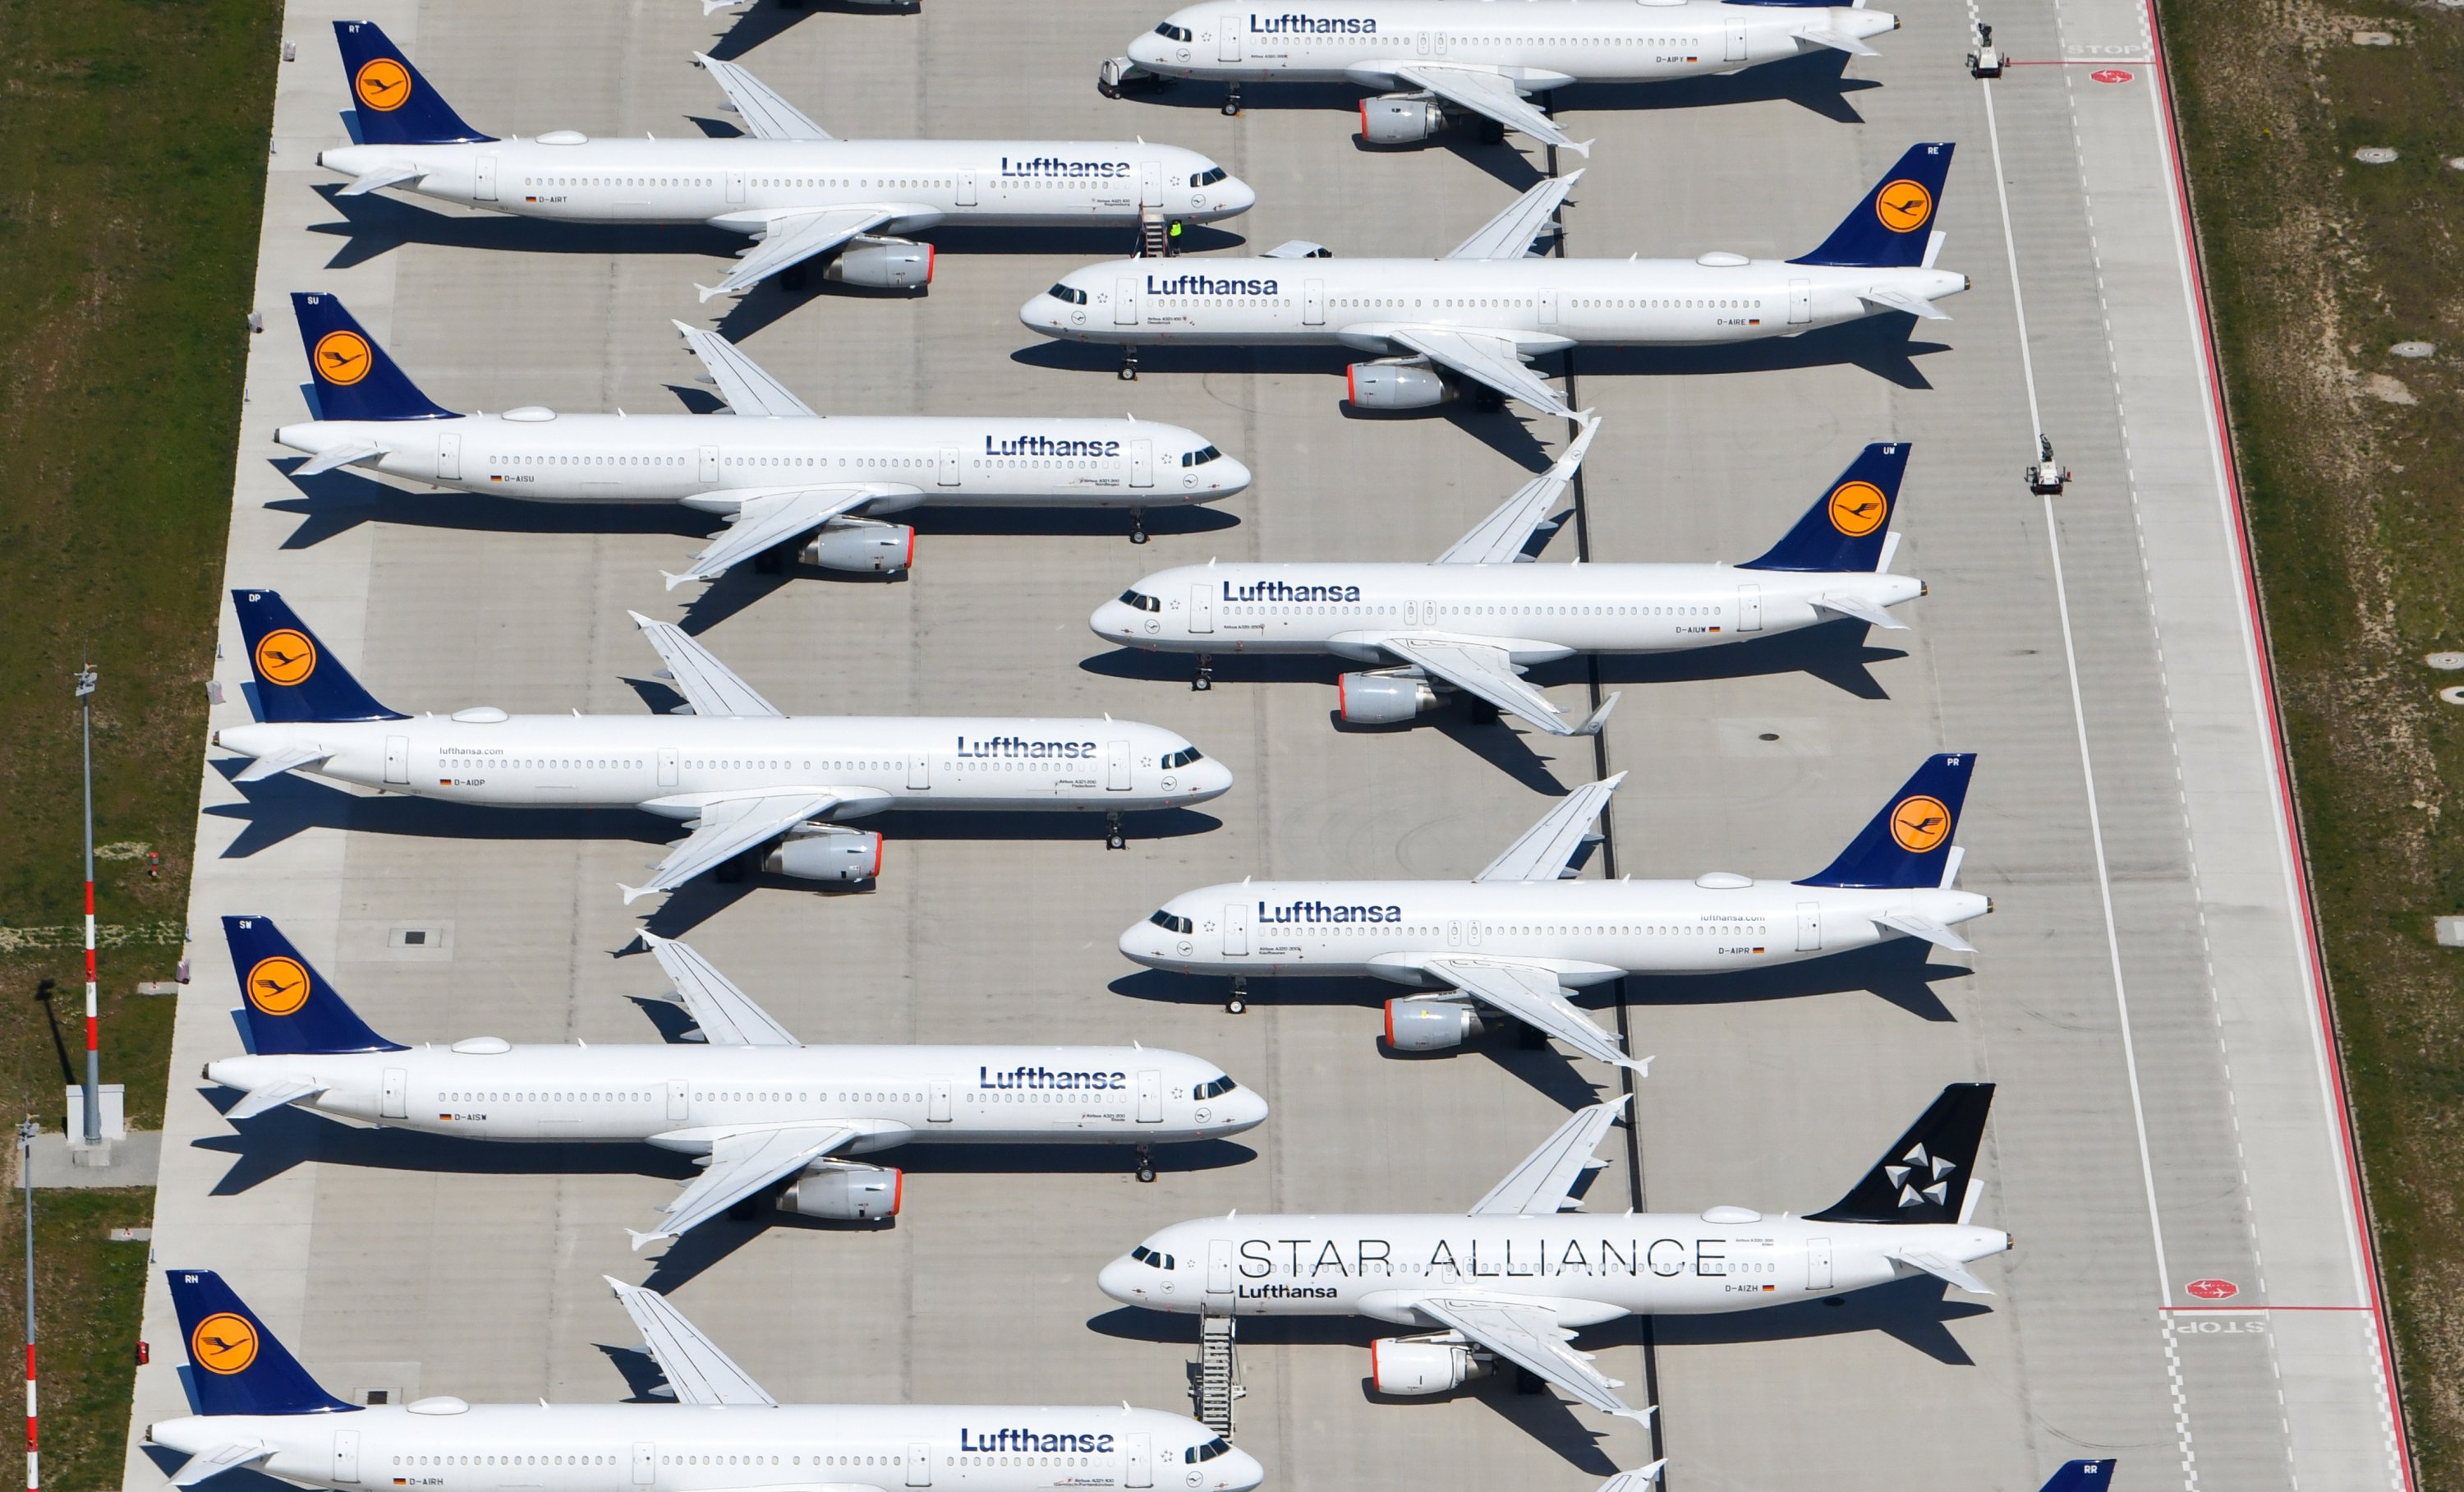 Lufthansa starts a capital increase worth billions